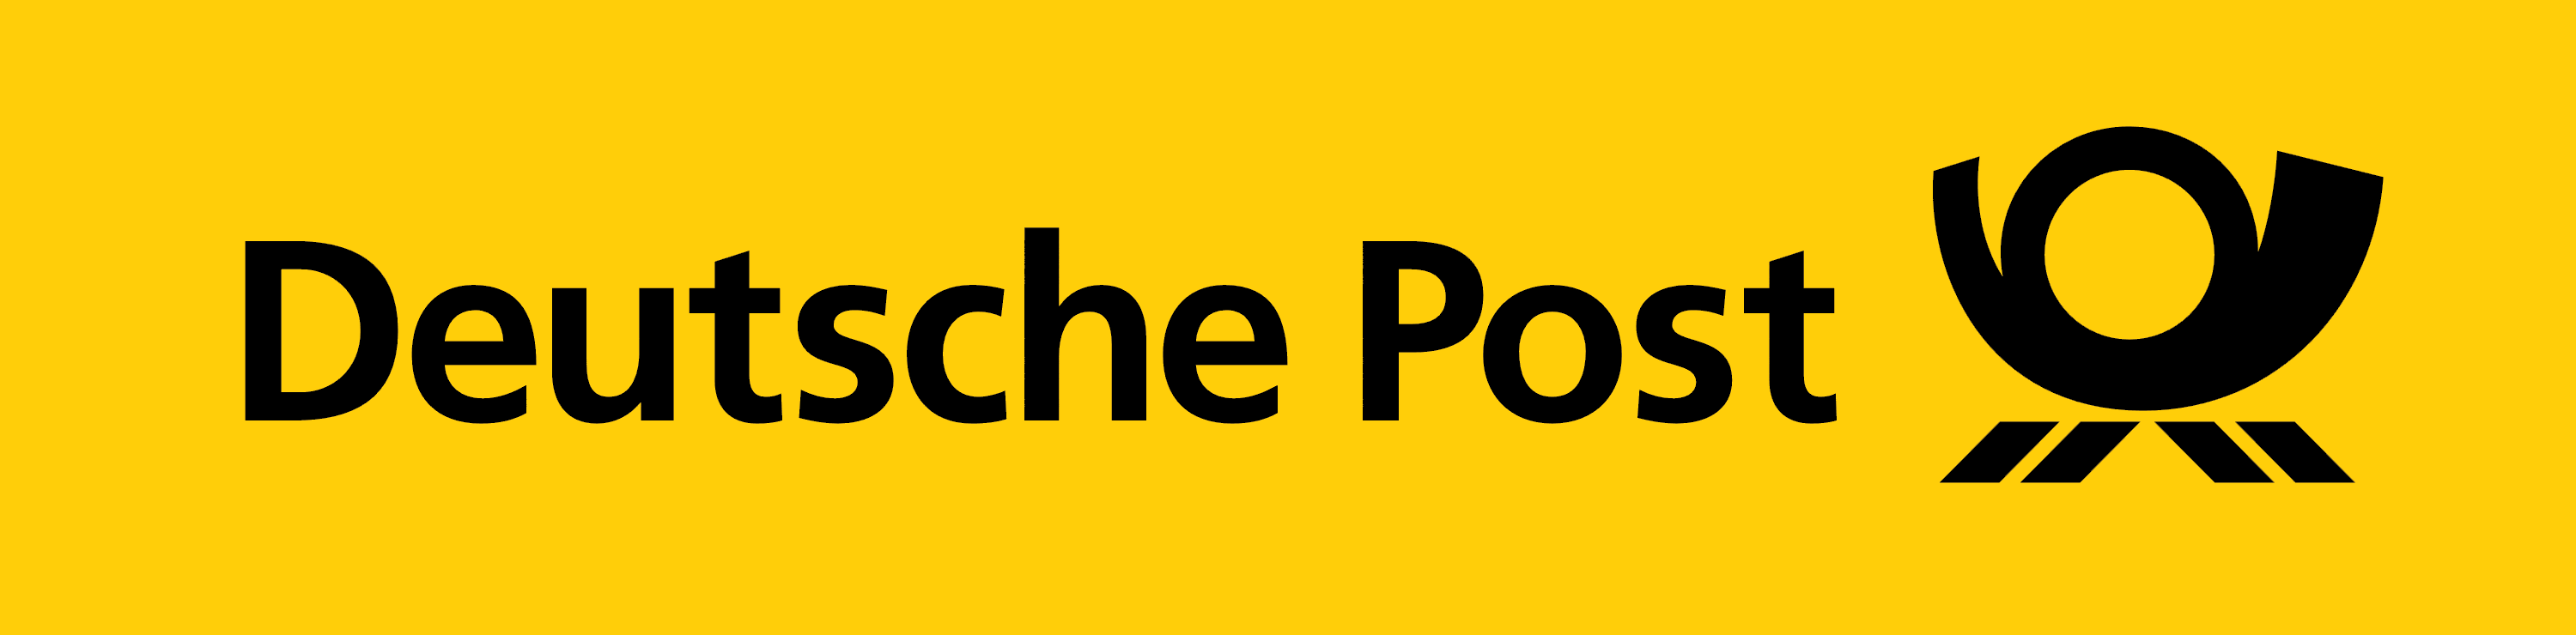 Deutsche Post logo, logotype